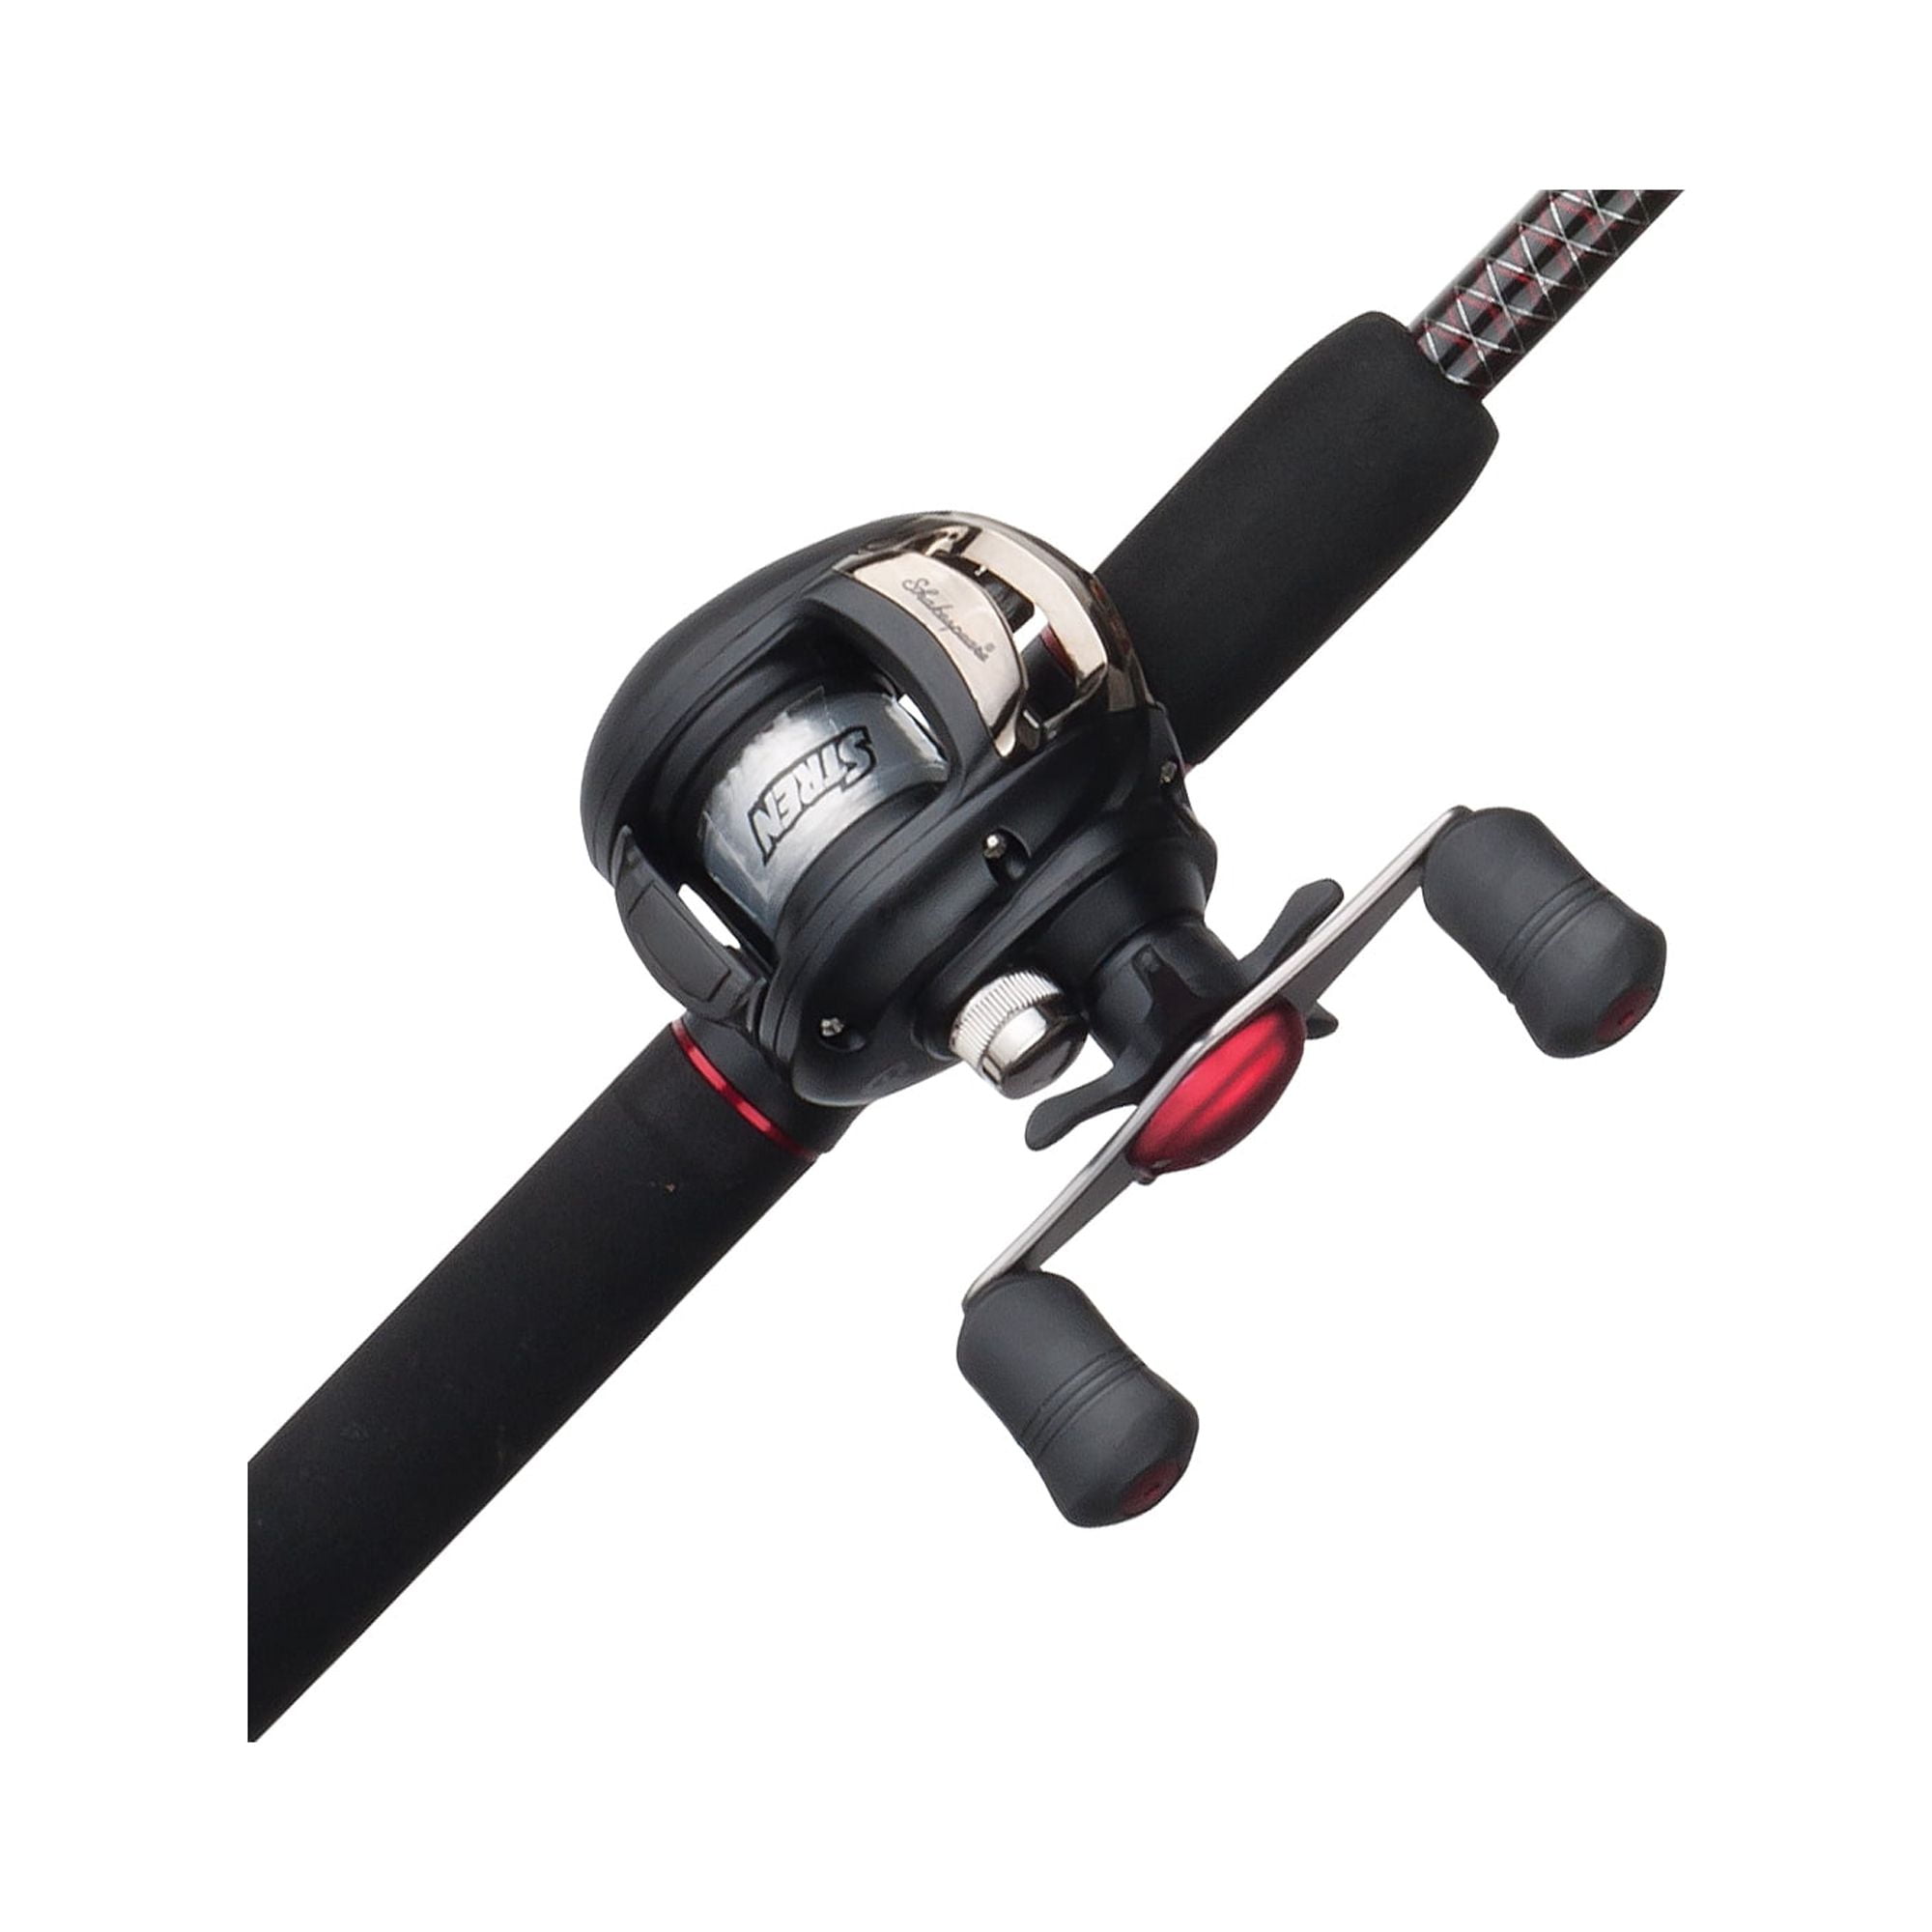 Ugly Stik 6'6” GX2 Baitcast Fishing Rod and Reel Casting Combo